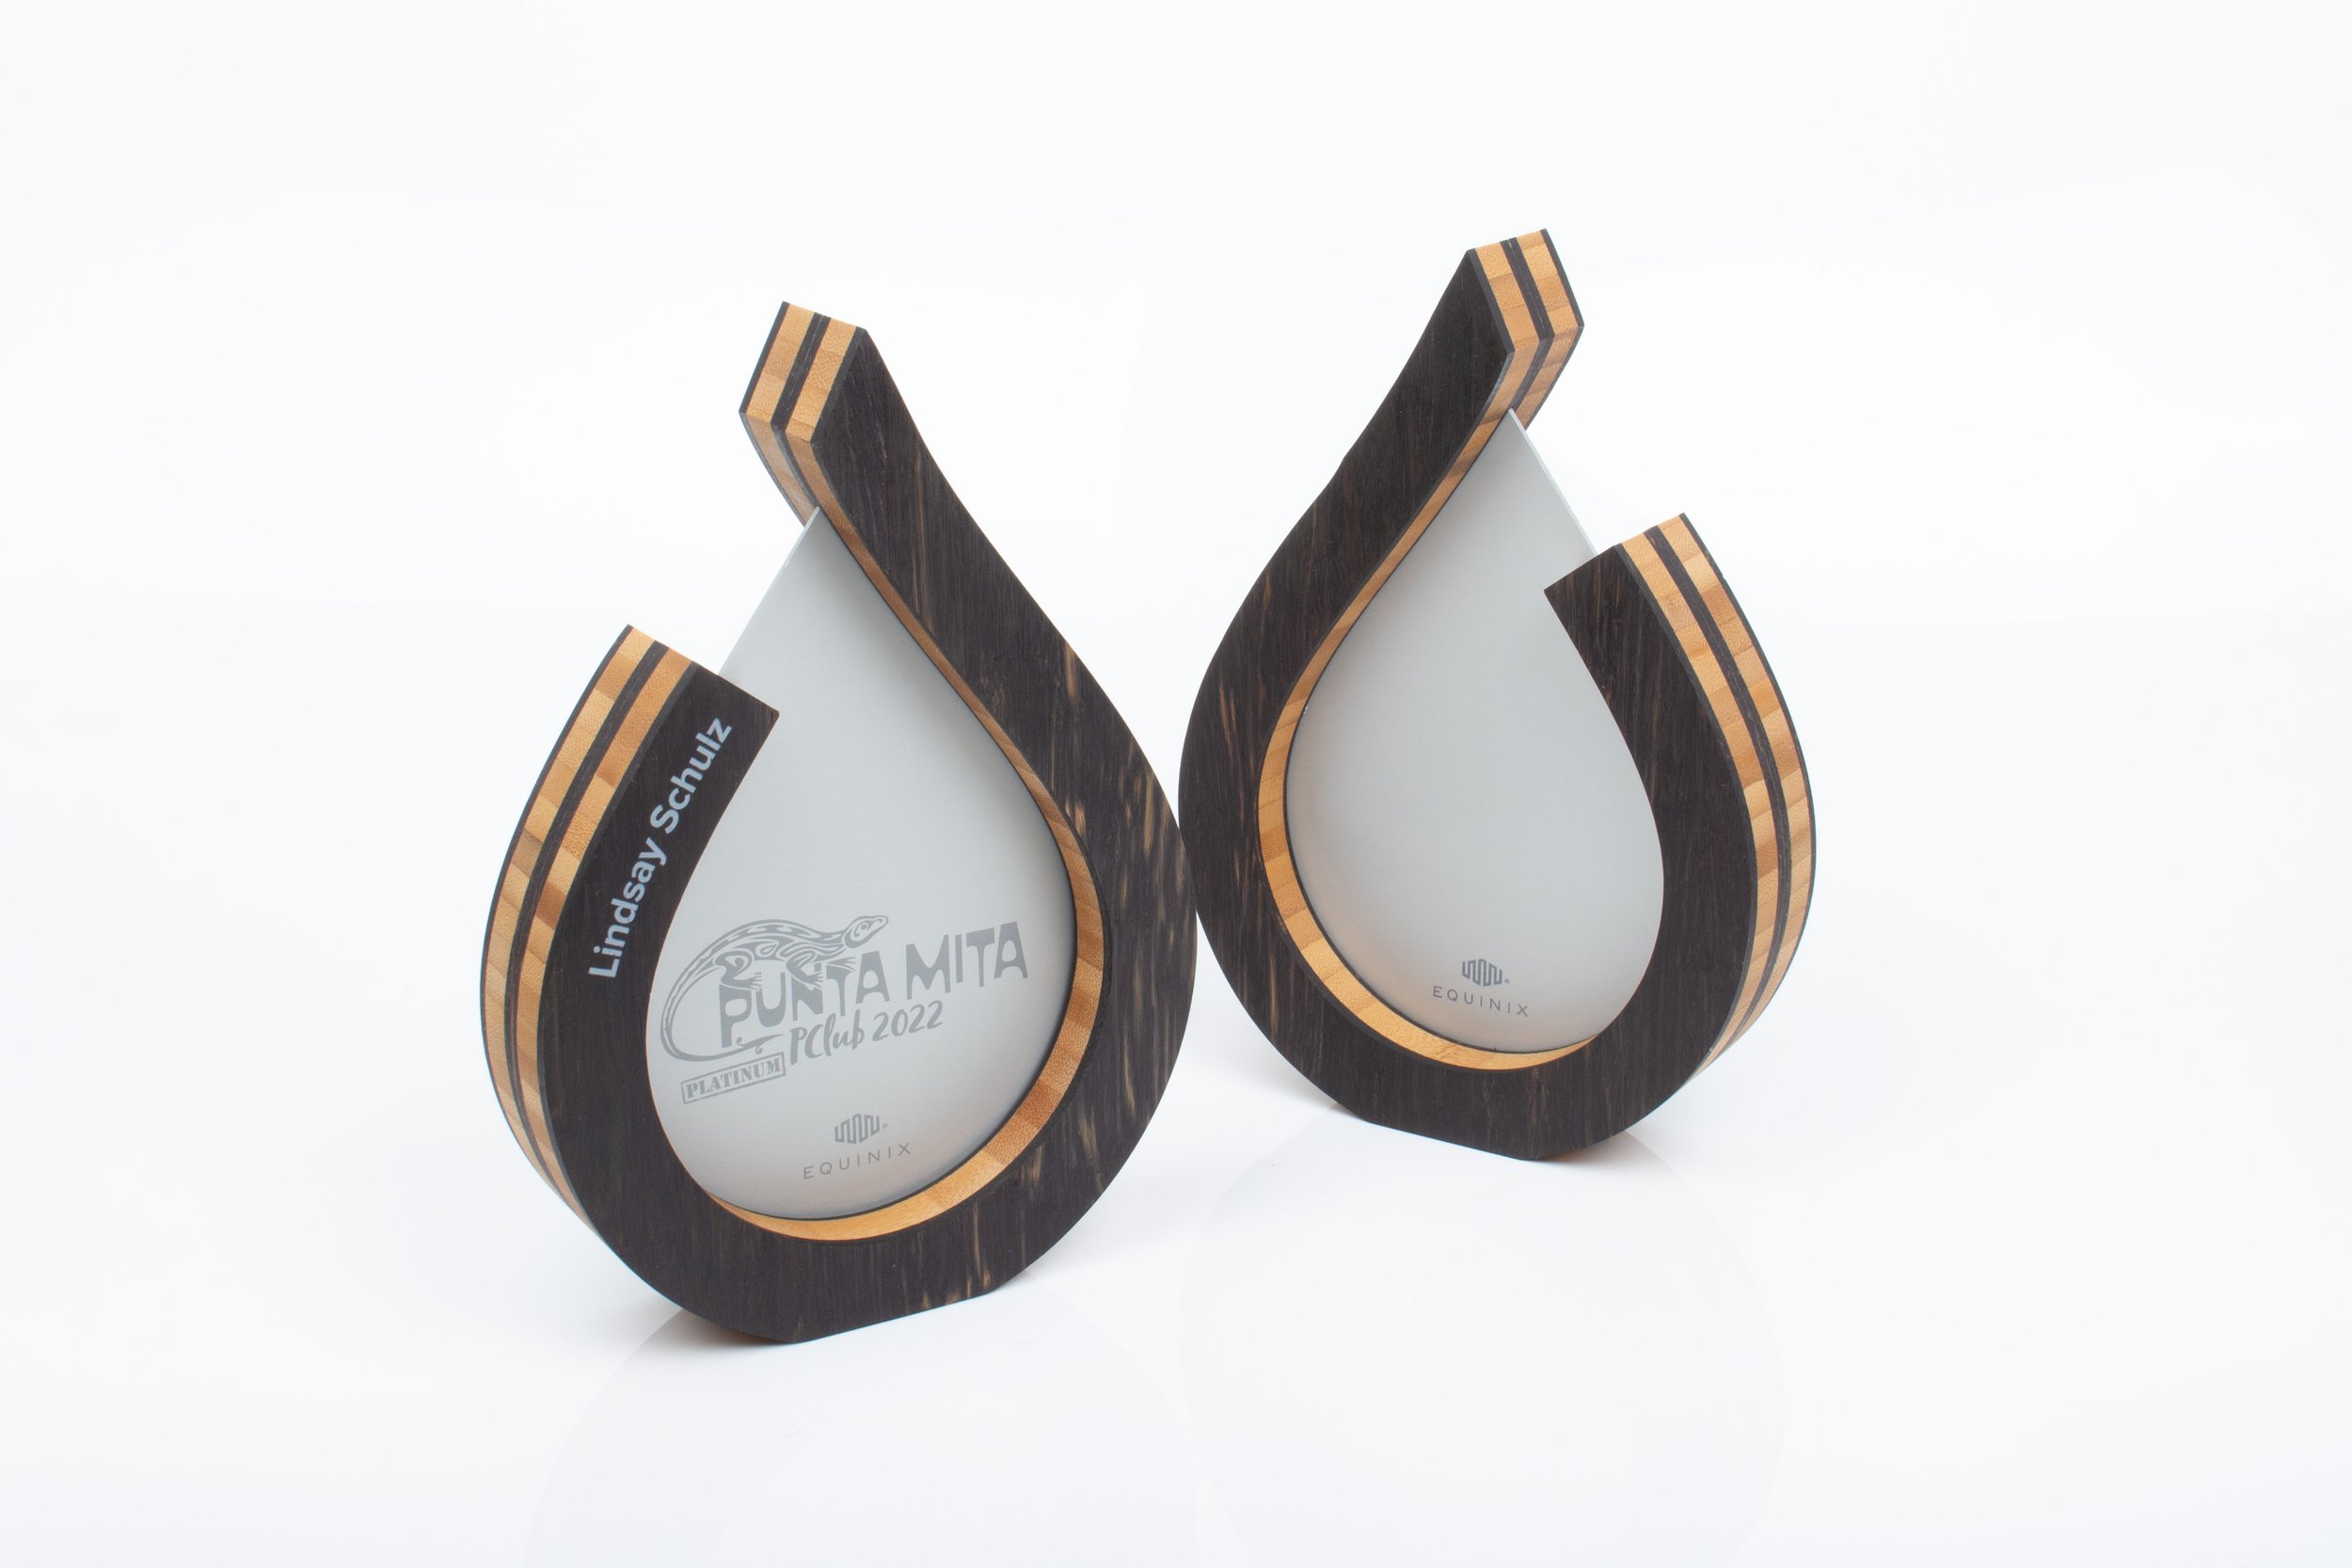 Custom bamboo president's club awards for Equinix